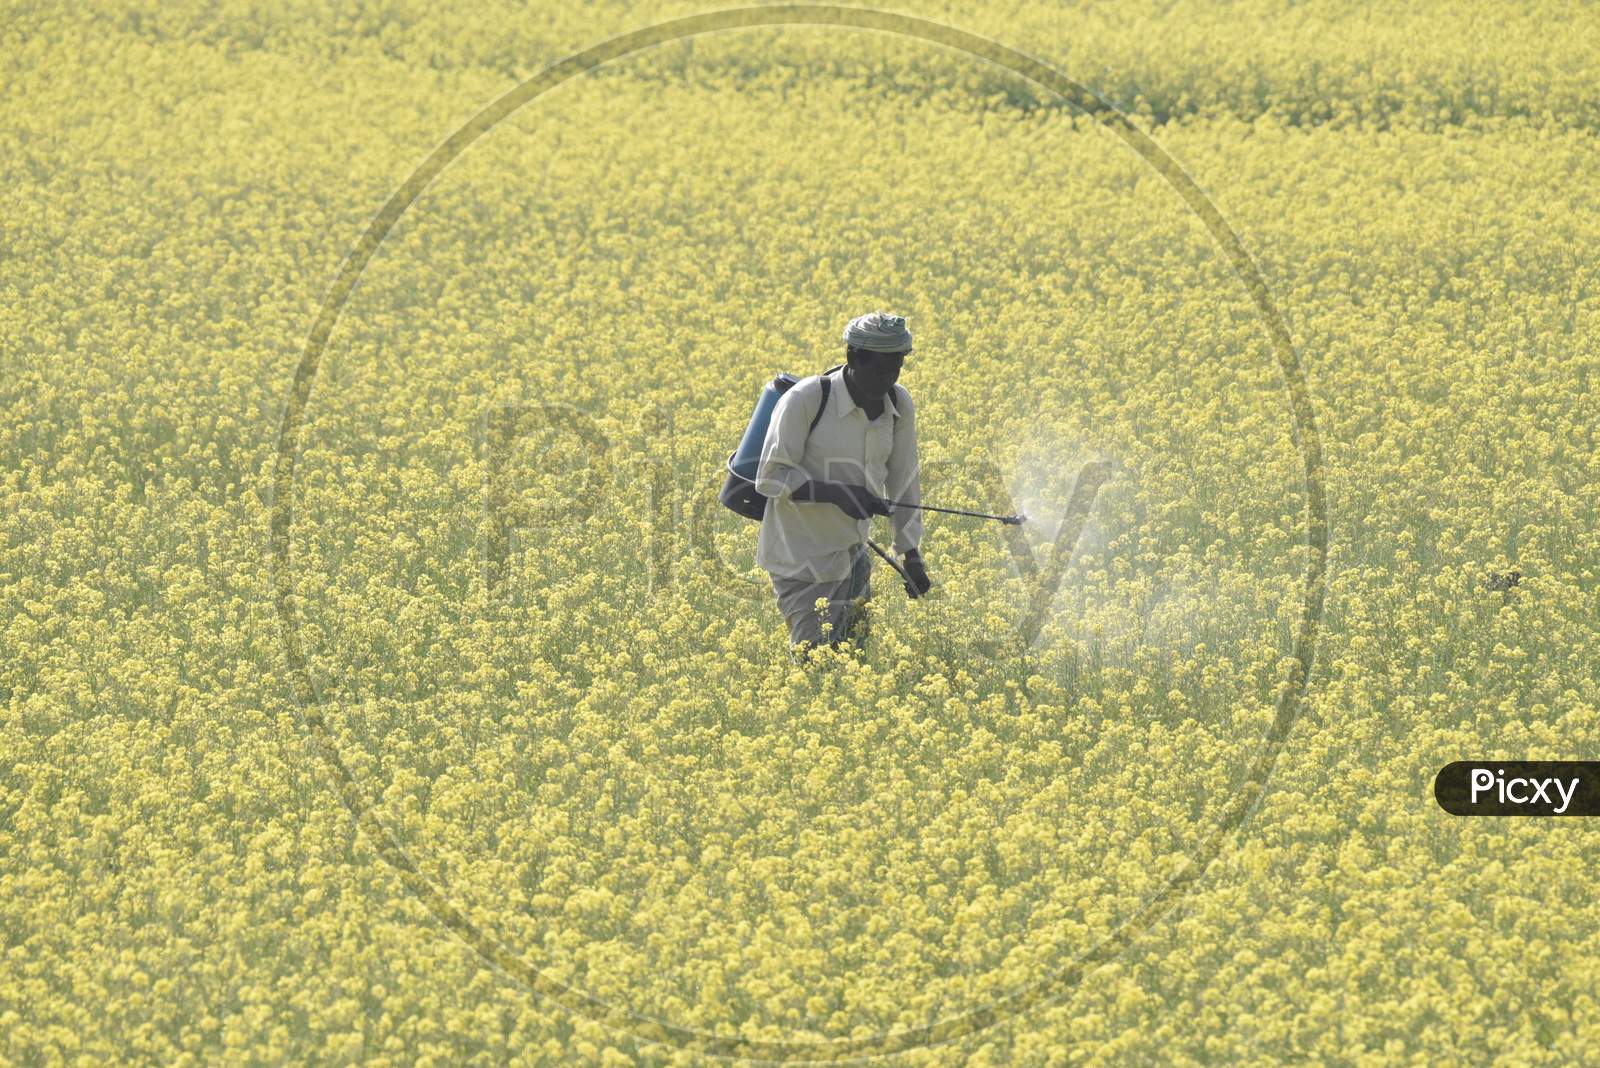 An Indian Farmer Spraying Pesticides in Mustard Harvesting  Fields